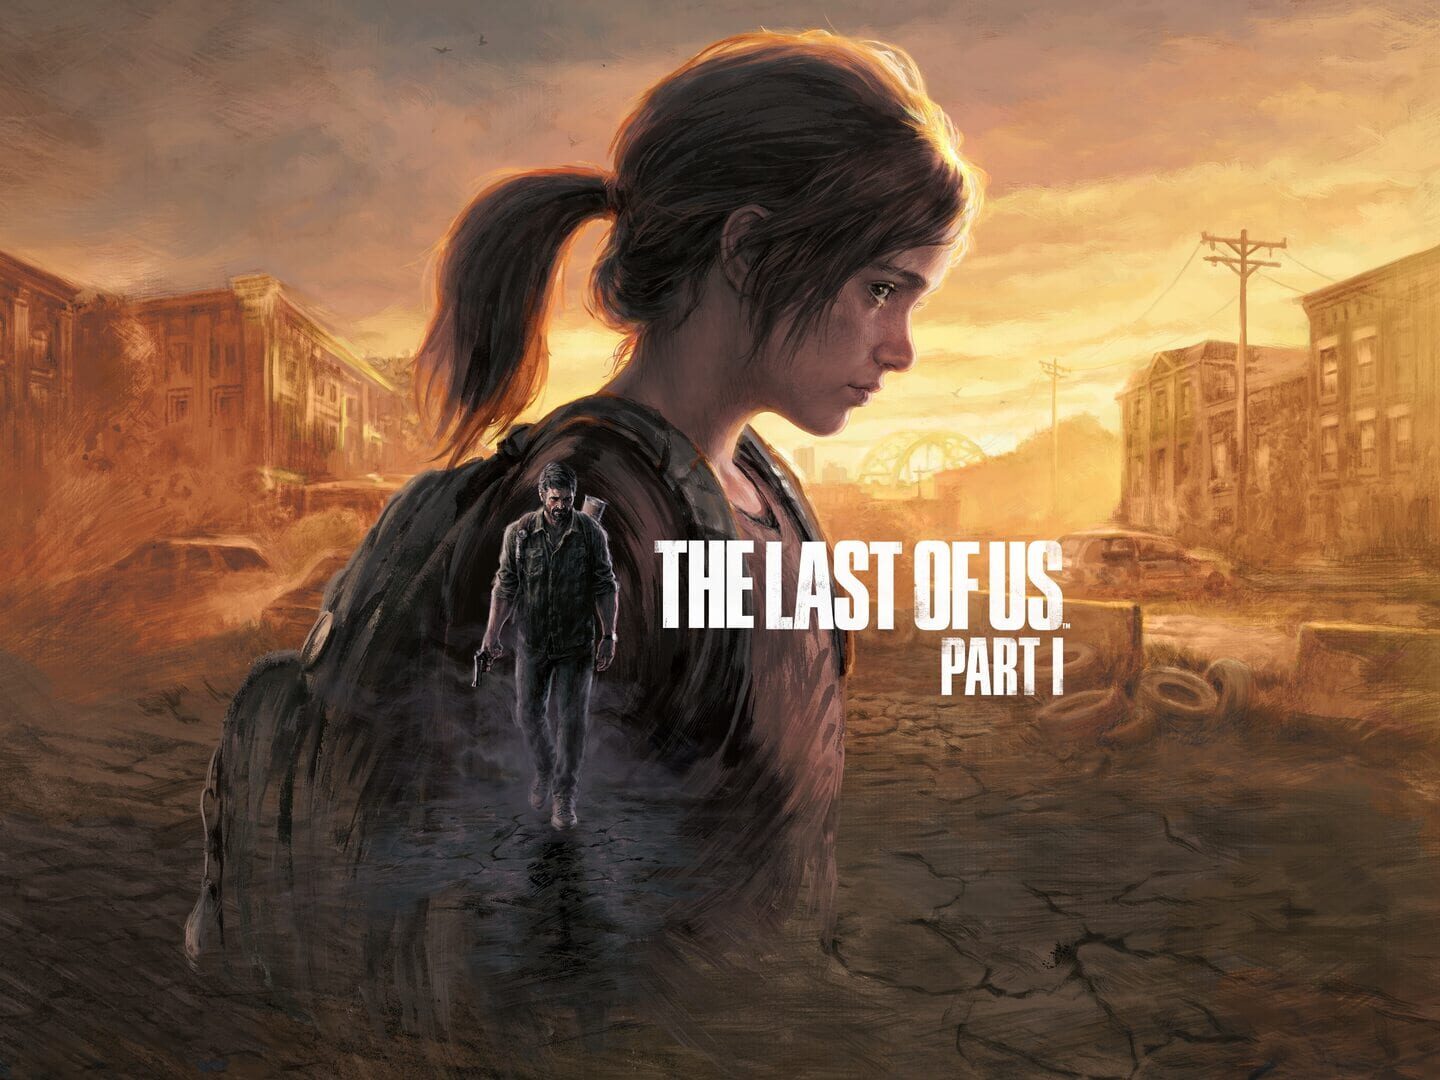 Arte - The Last of Us Part I